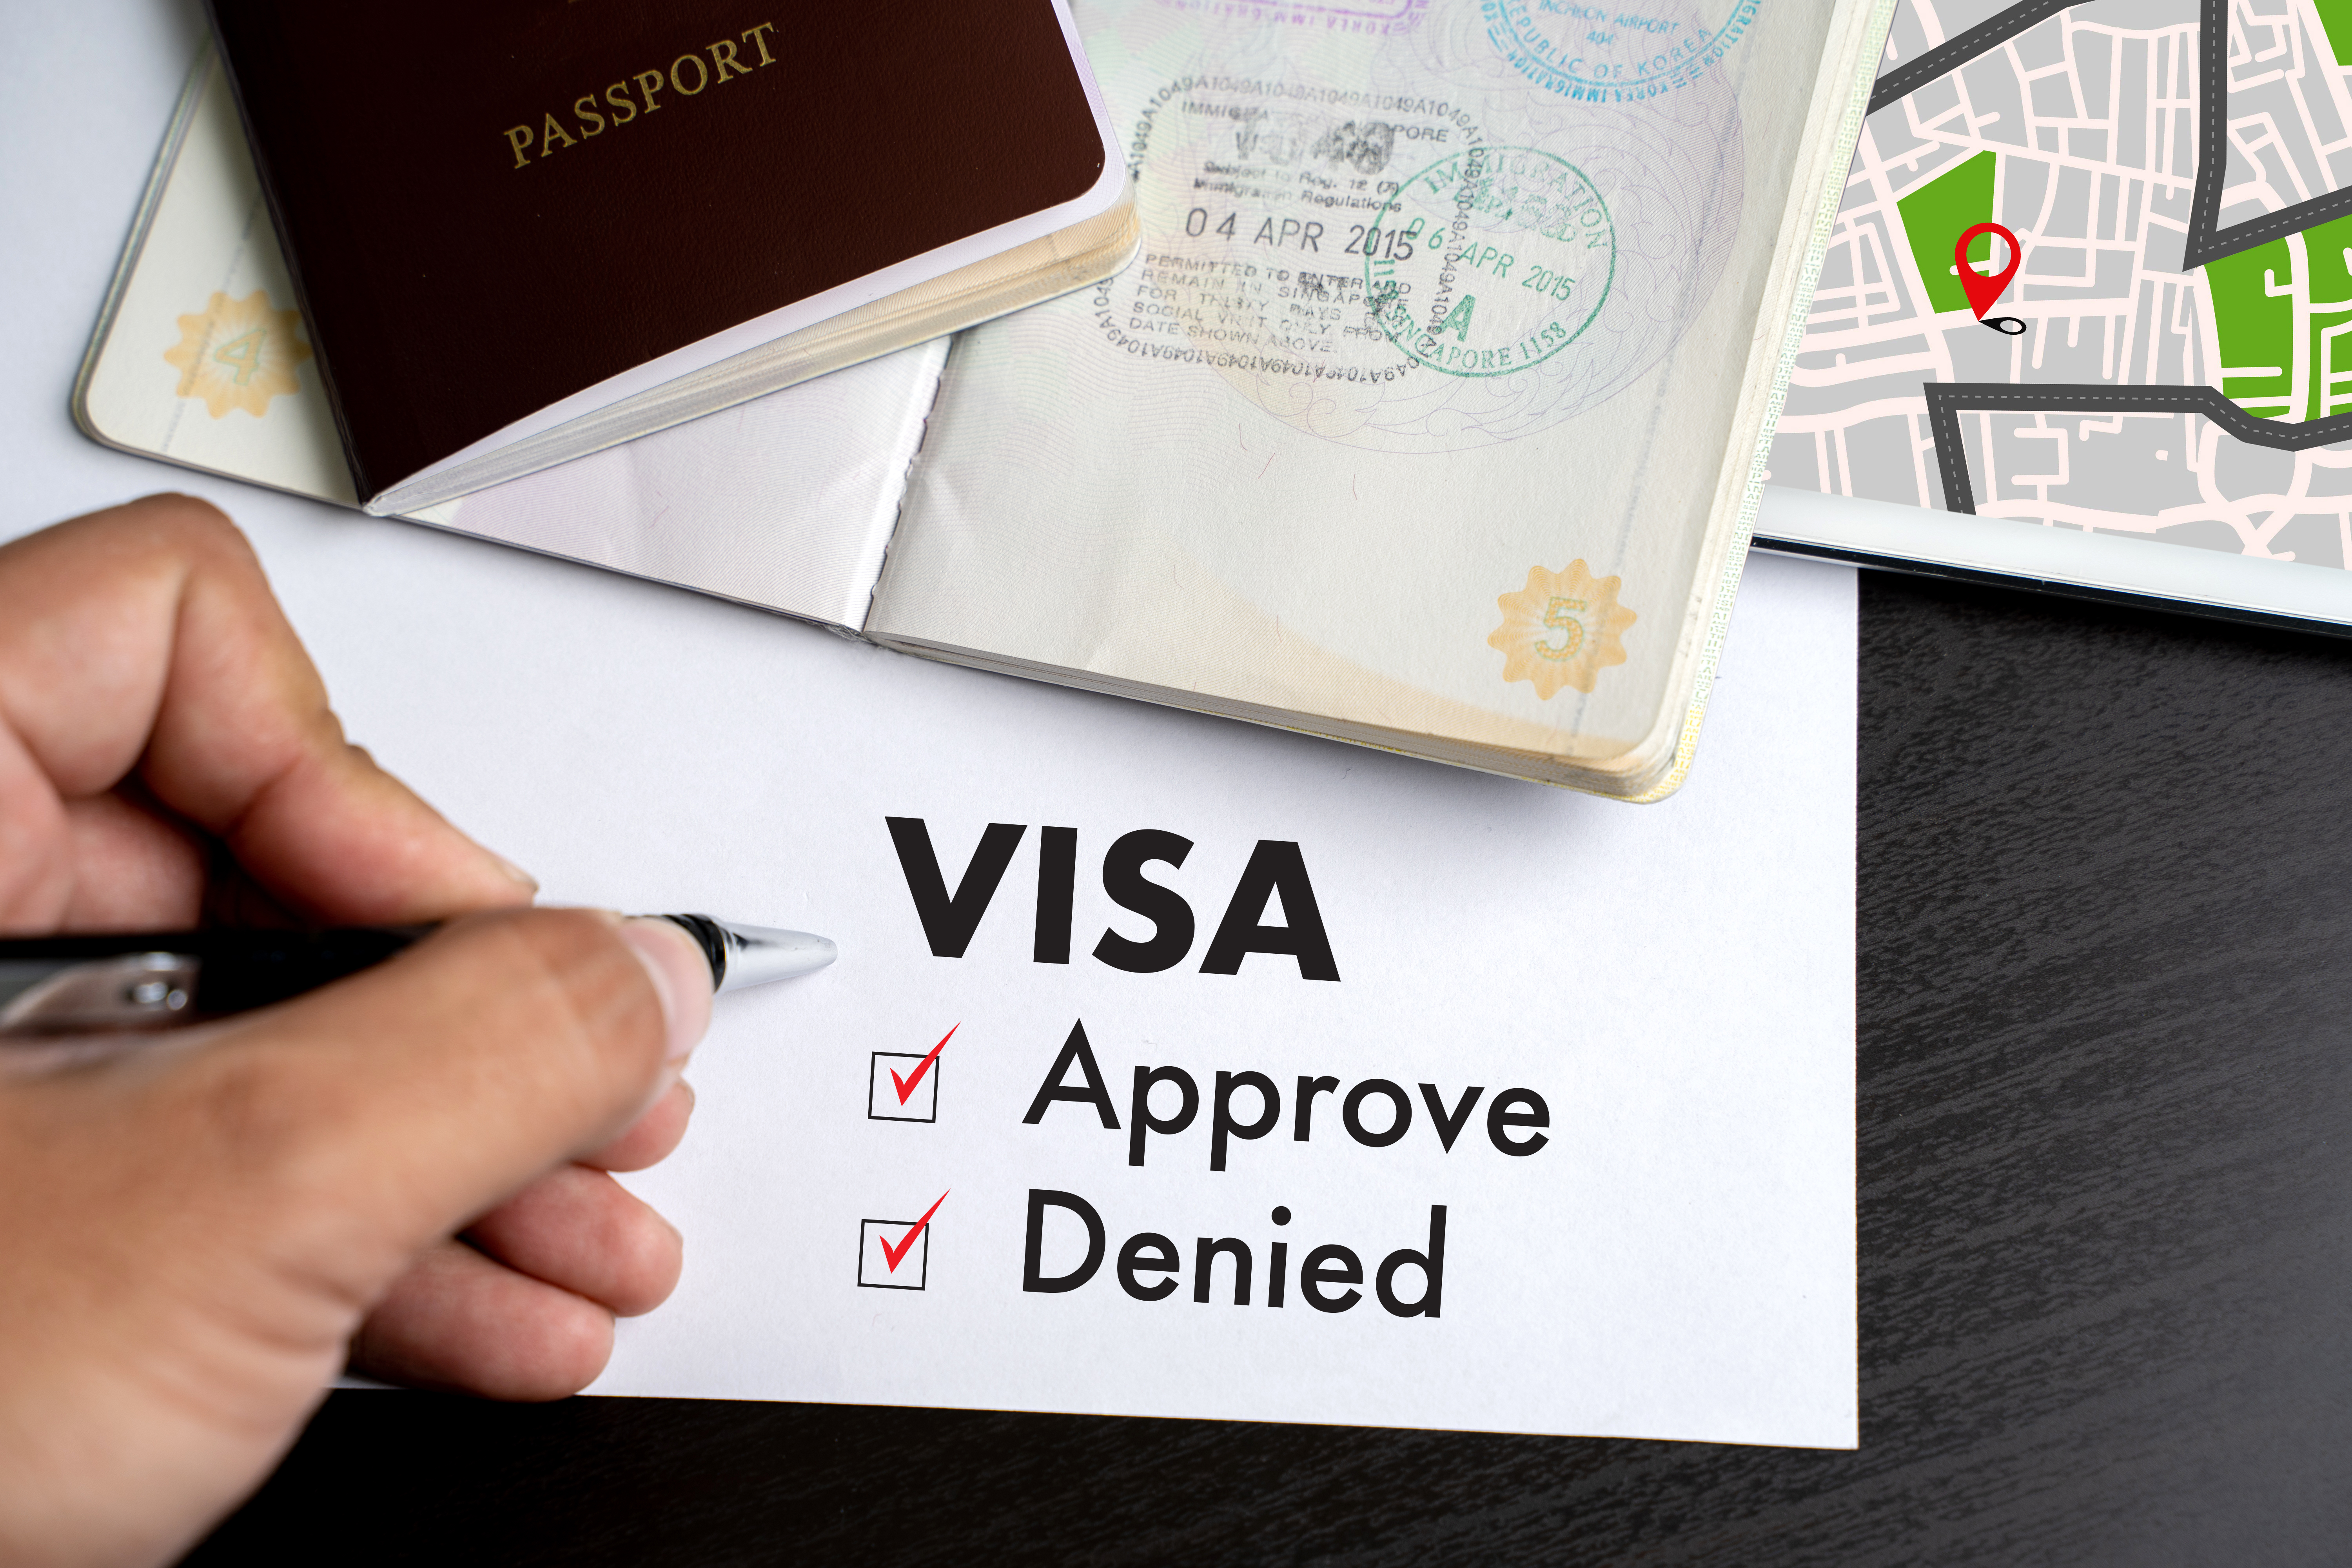 Vietanm travel tips - Visa approve